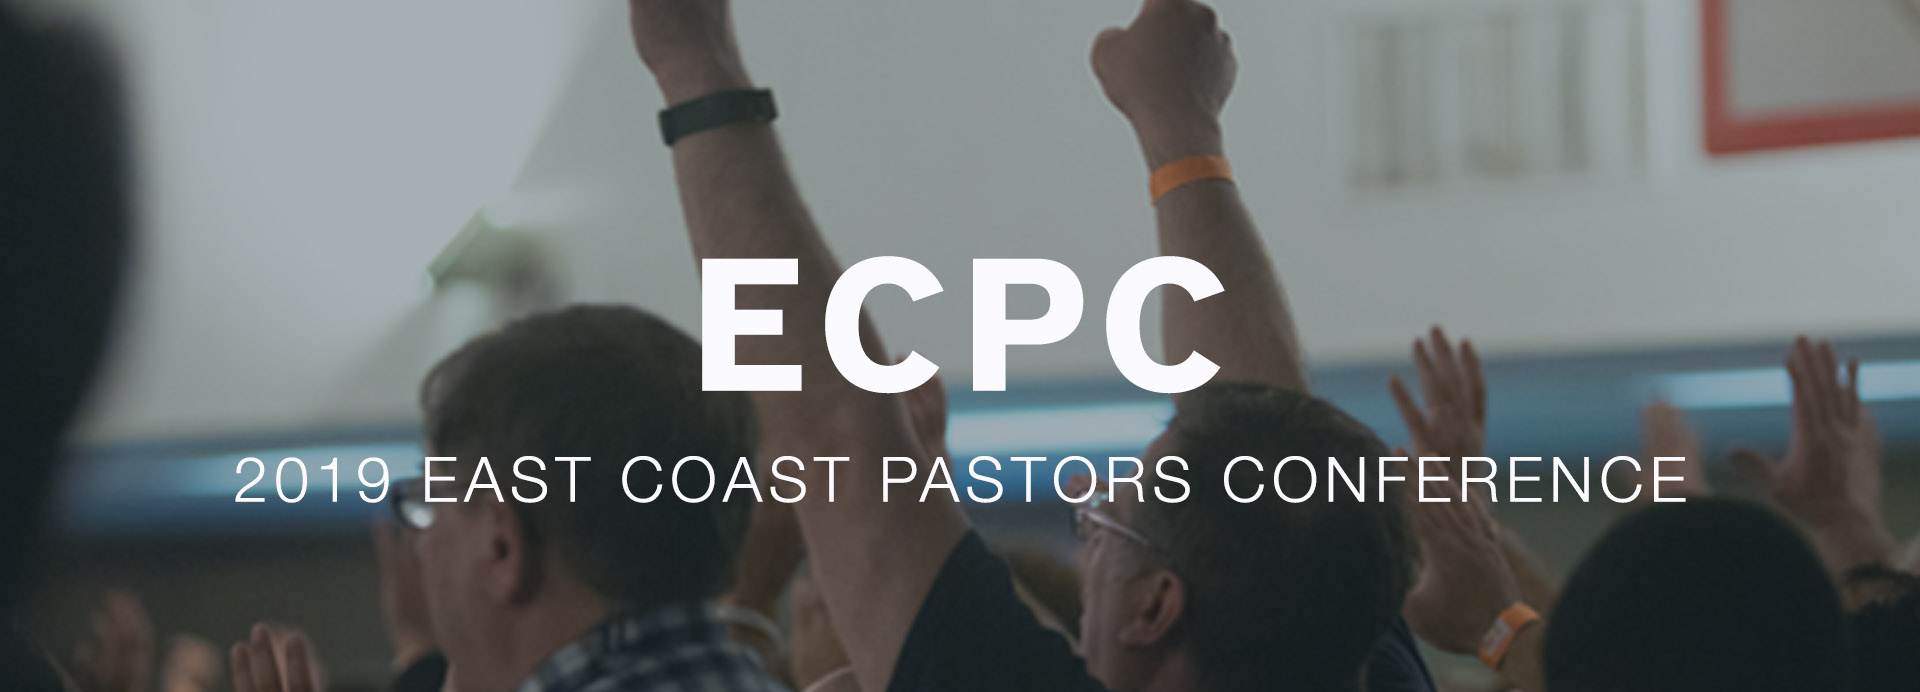 East Coast Pastors Conference 2019